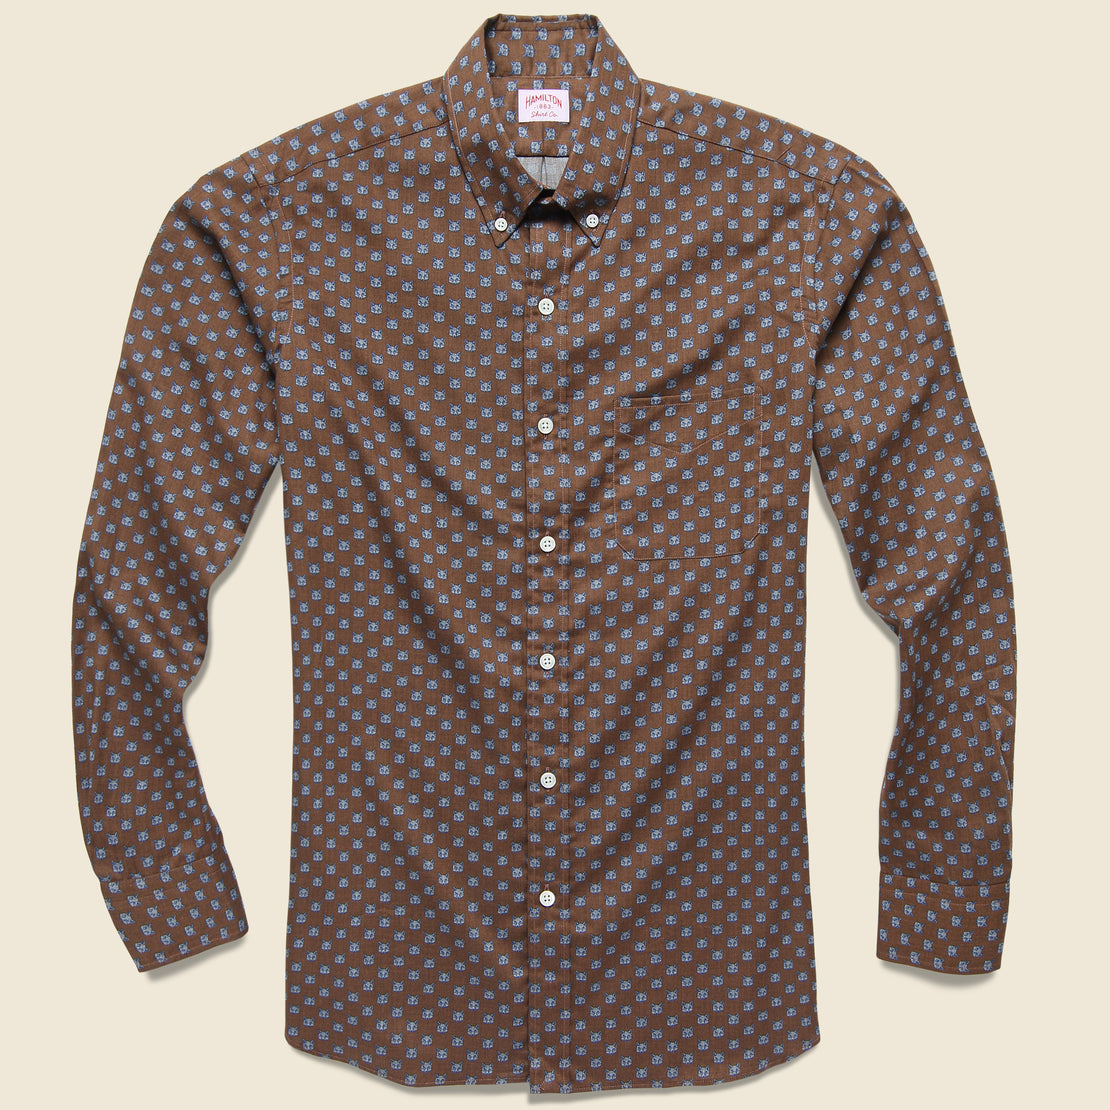 Hamilton Shirt Co. Fox Print Herringbone Shirt - Brown